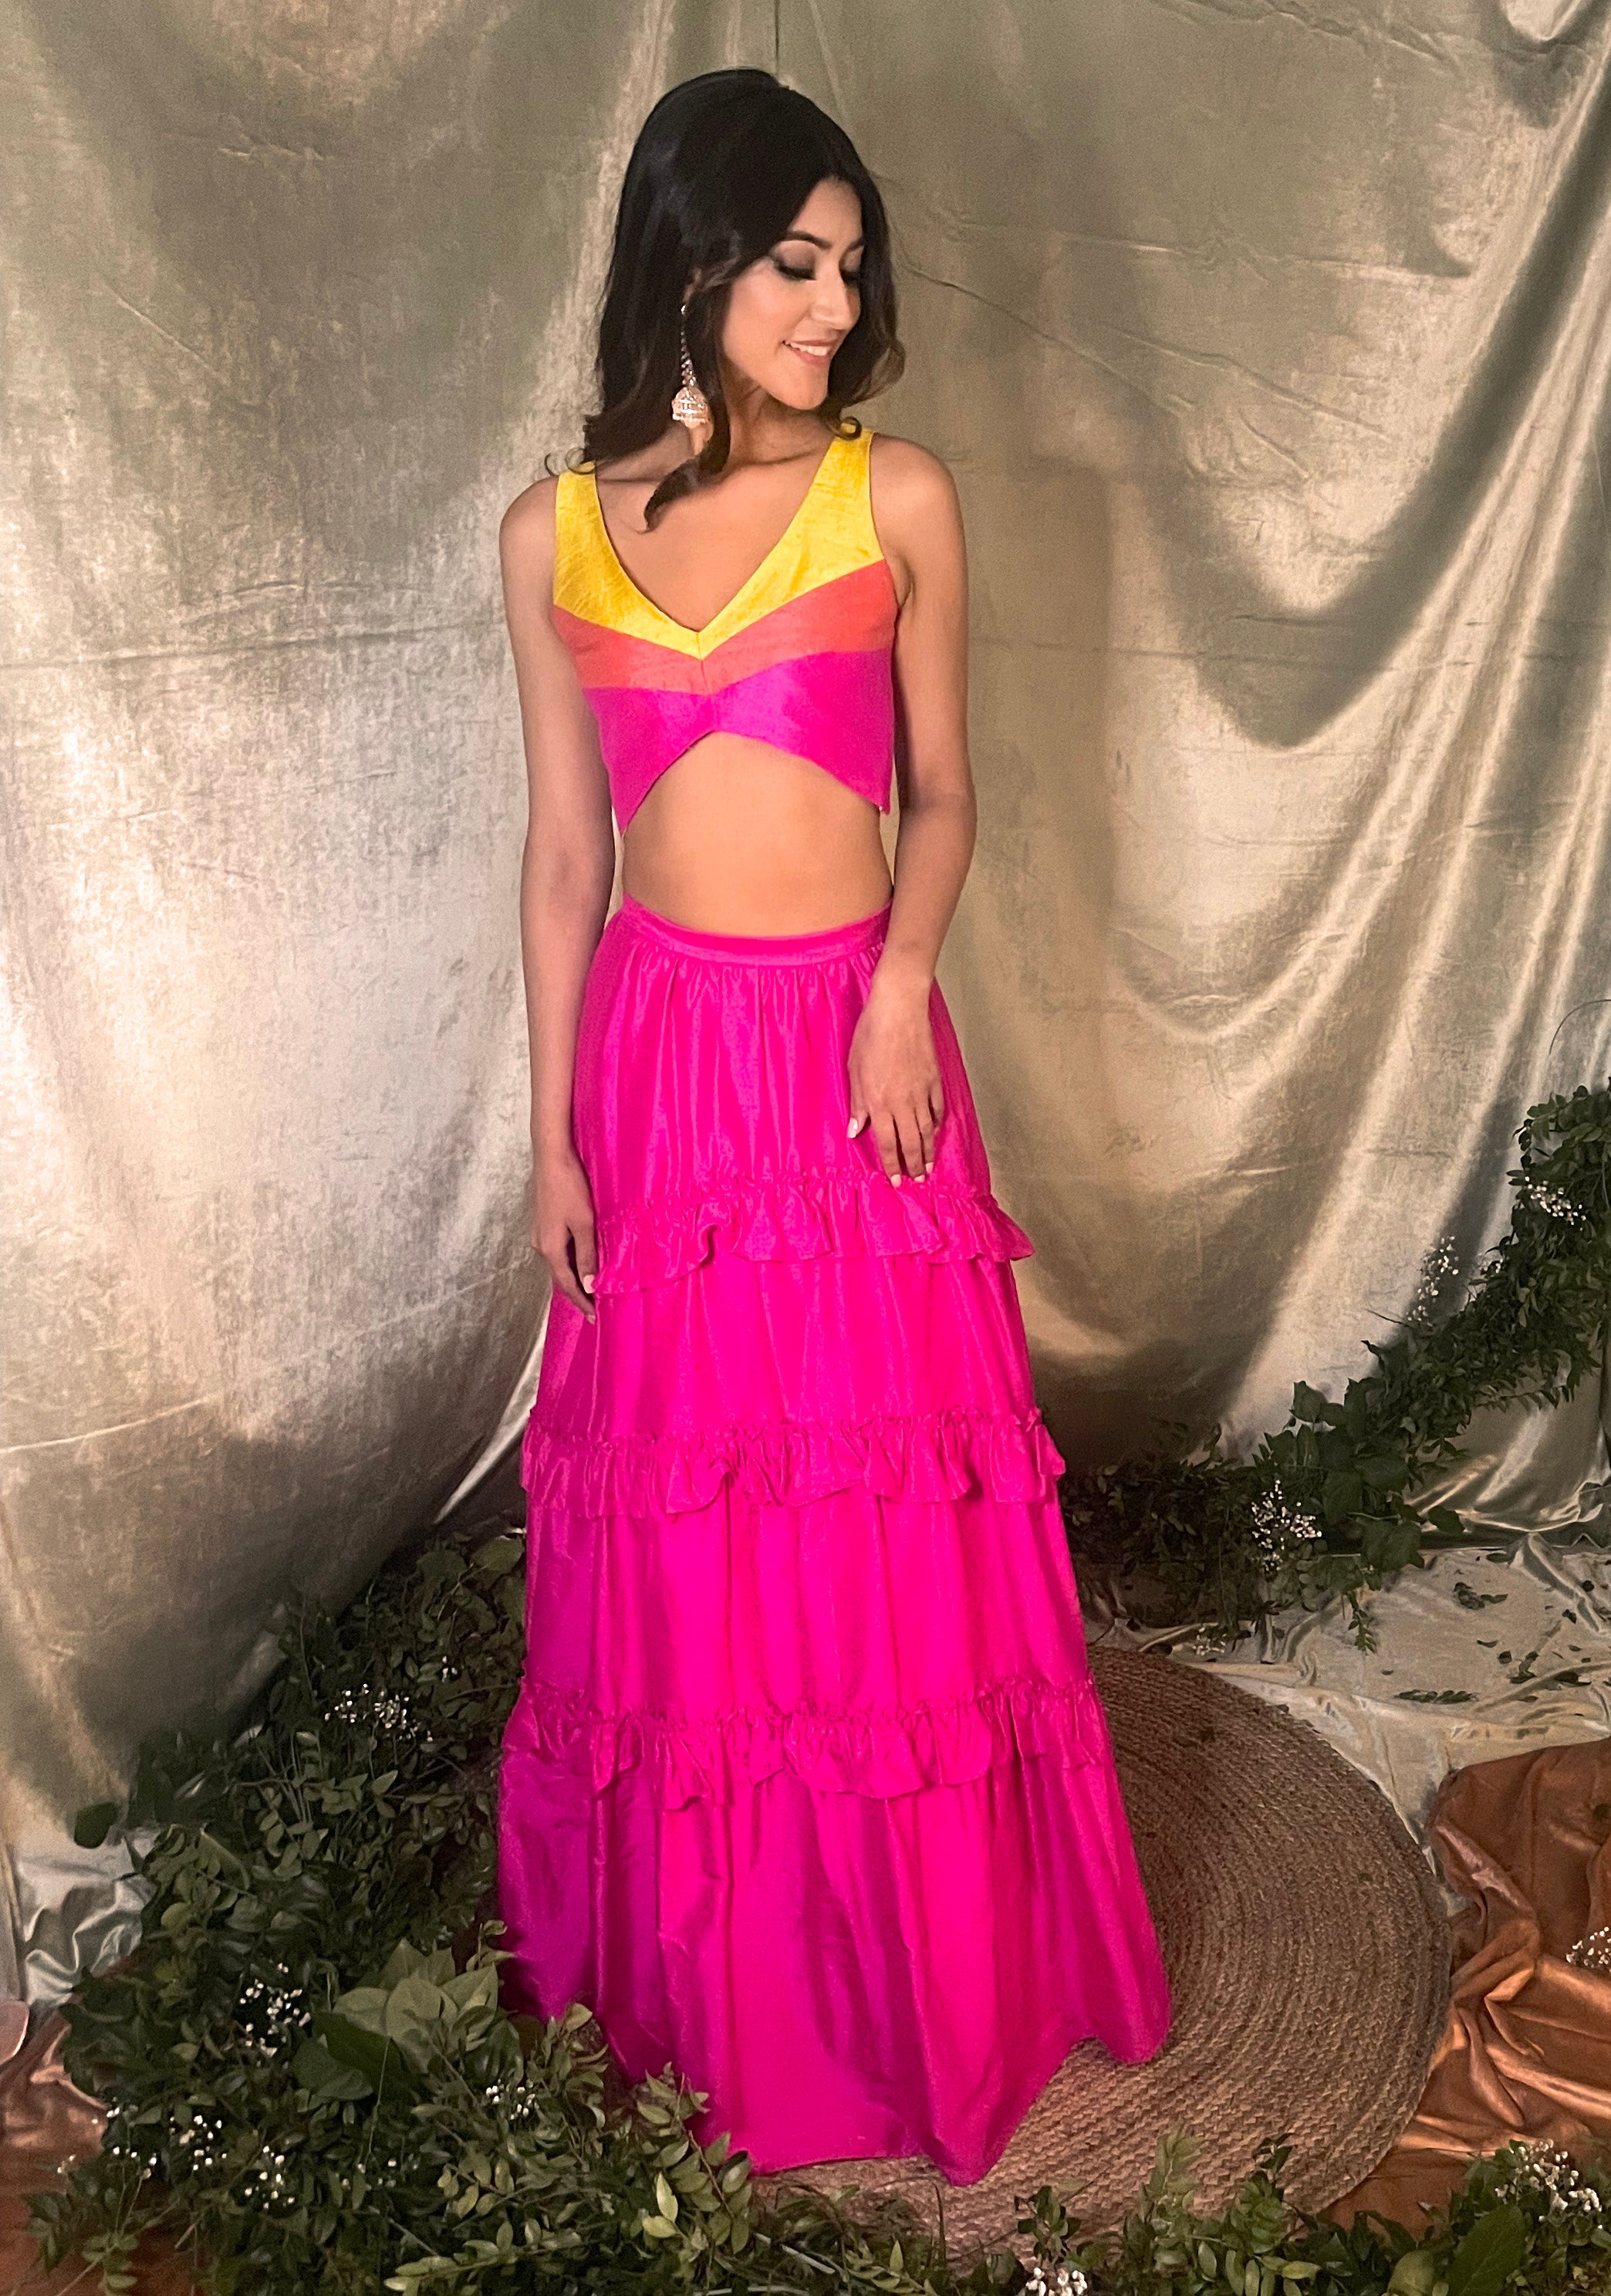 Anavi Sharma in a silk yellow, orange, and pink colorblock lehenga top - Front View - Harleen Kaur